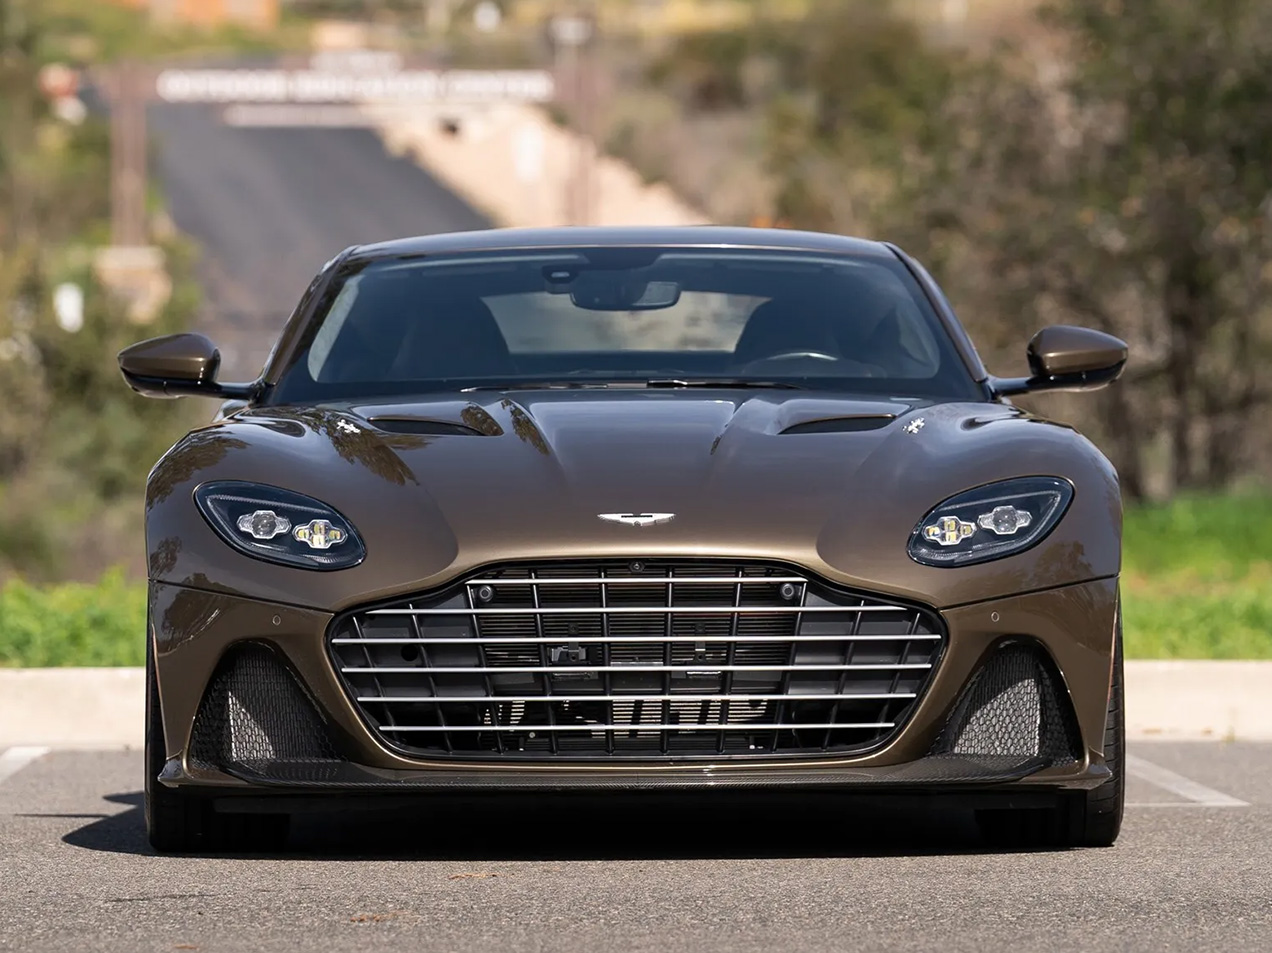 Aston Martin Dbs Superleggera Ohmss Edition For Sale | Bond Lifestyle